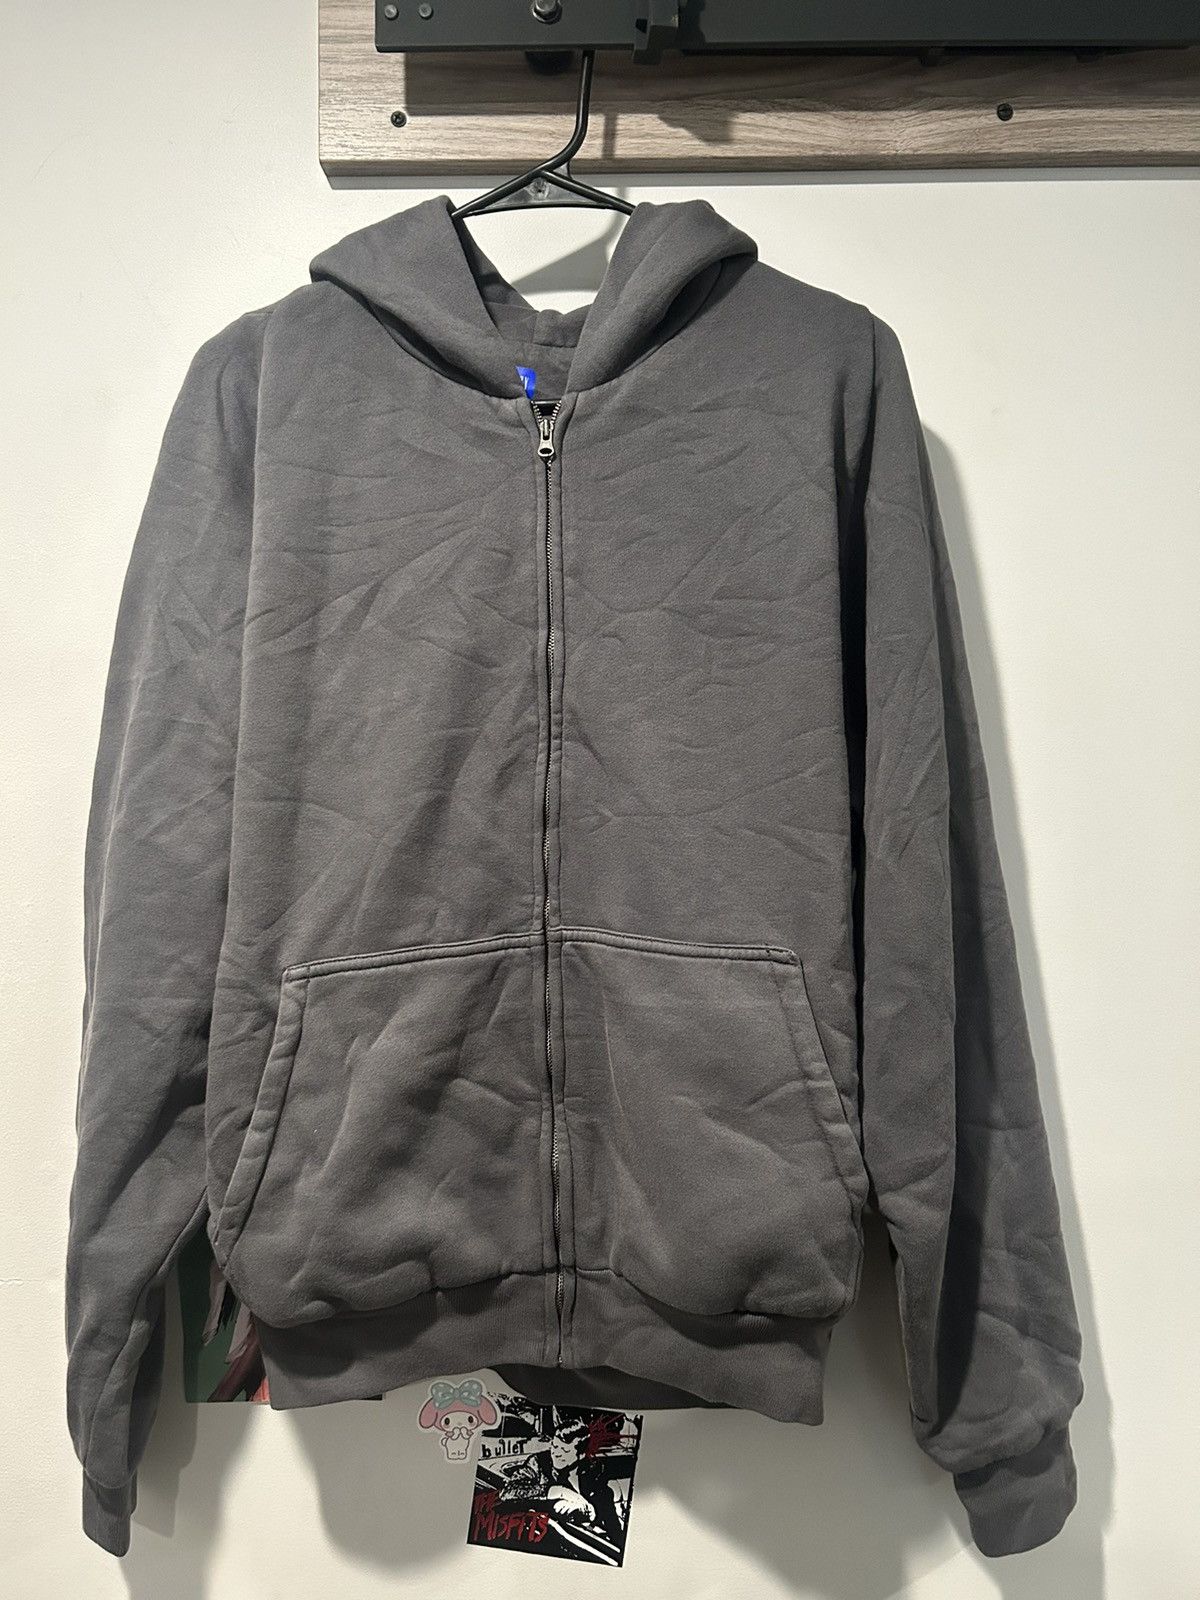 Balenciaga Yeezy Gap zip up hoodie Dark Grey M | Grailed